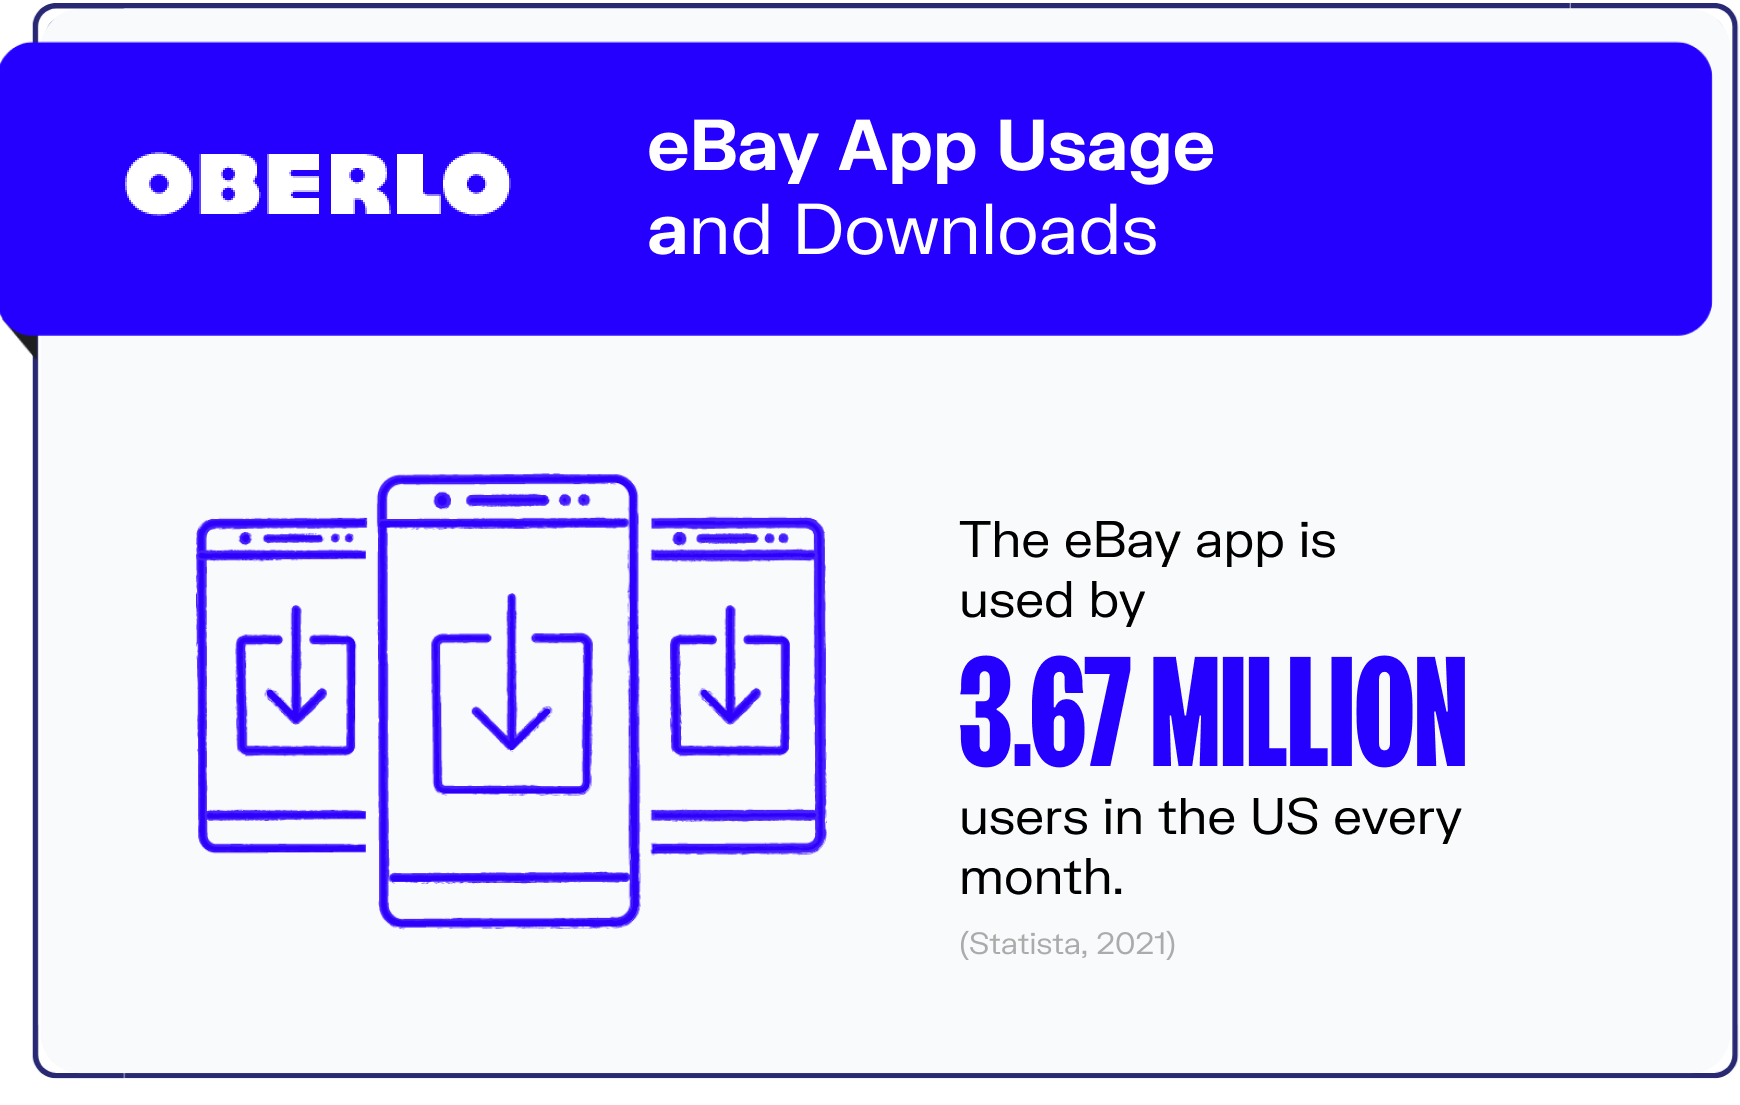 ebay statistics graphic2